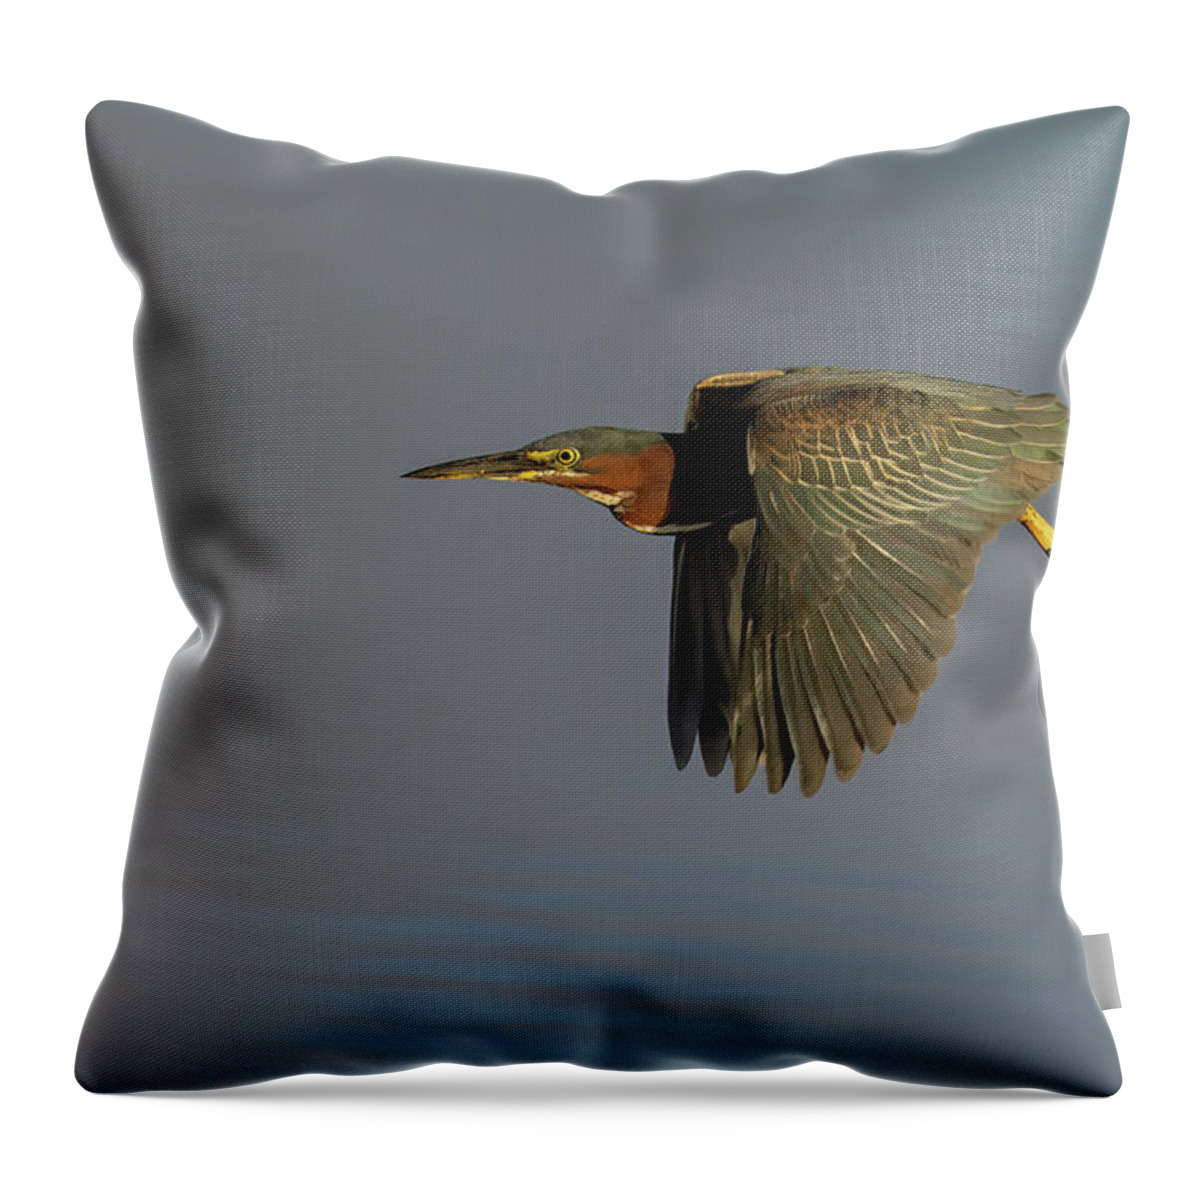 Green Heron Throw Pillow featuring the photograph Green Heron Flight by RD Allen